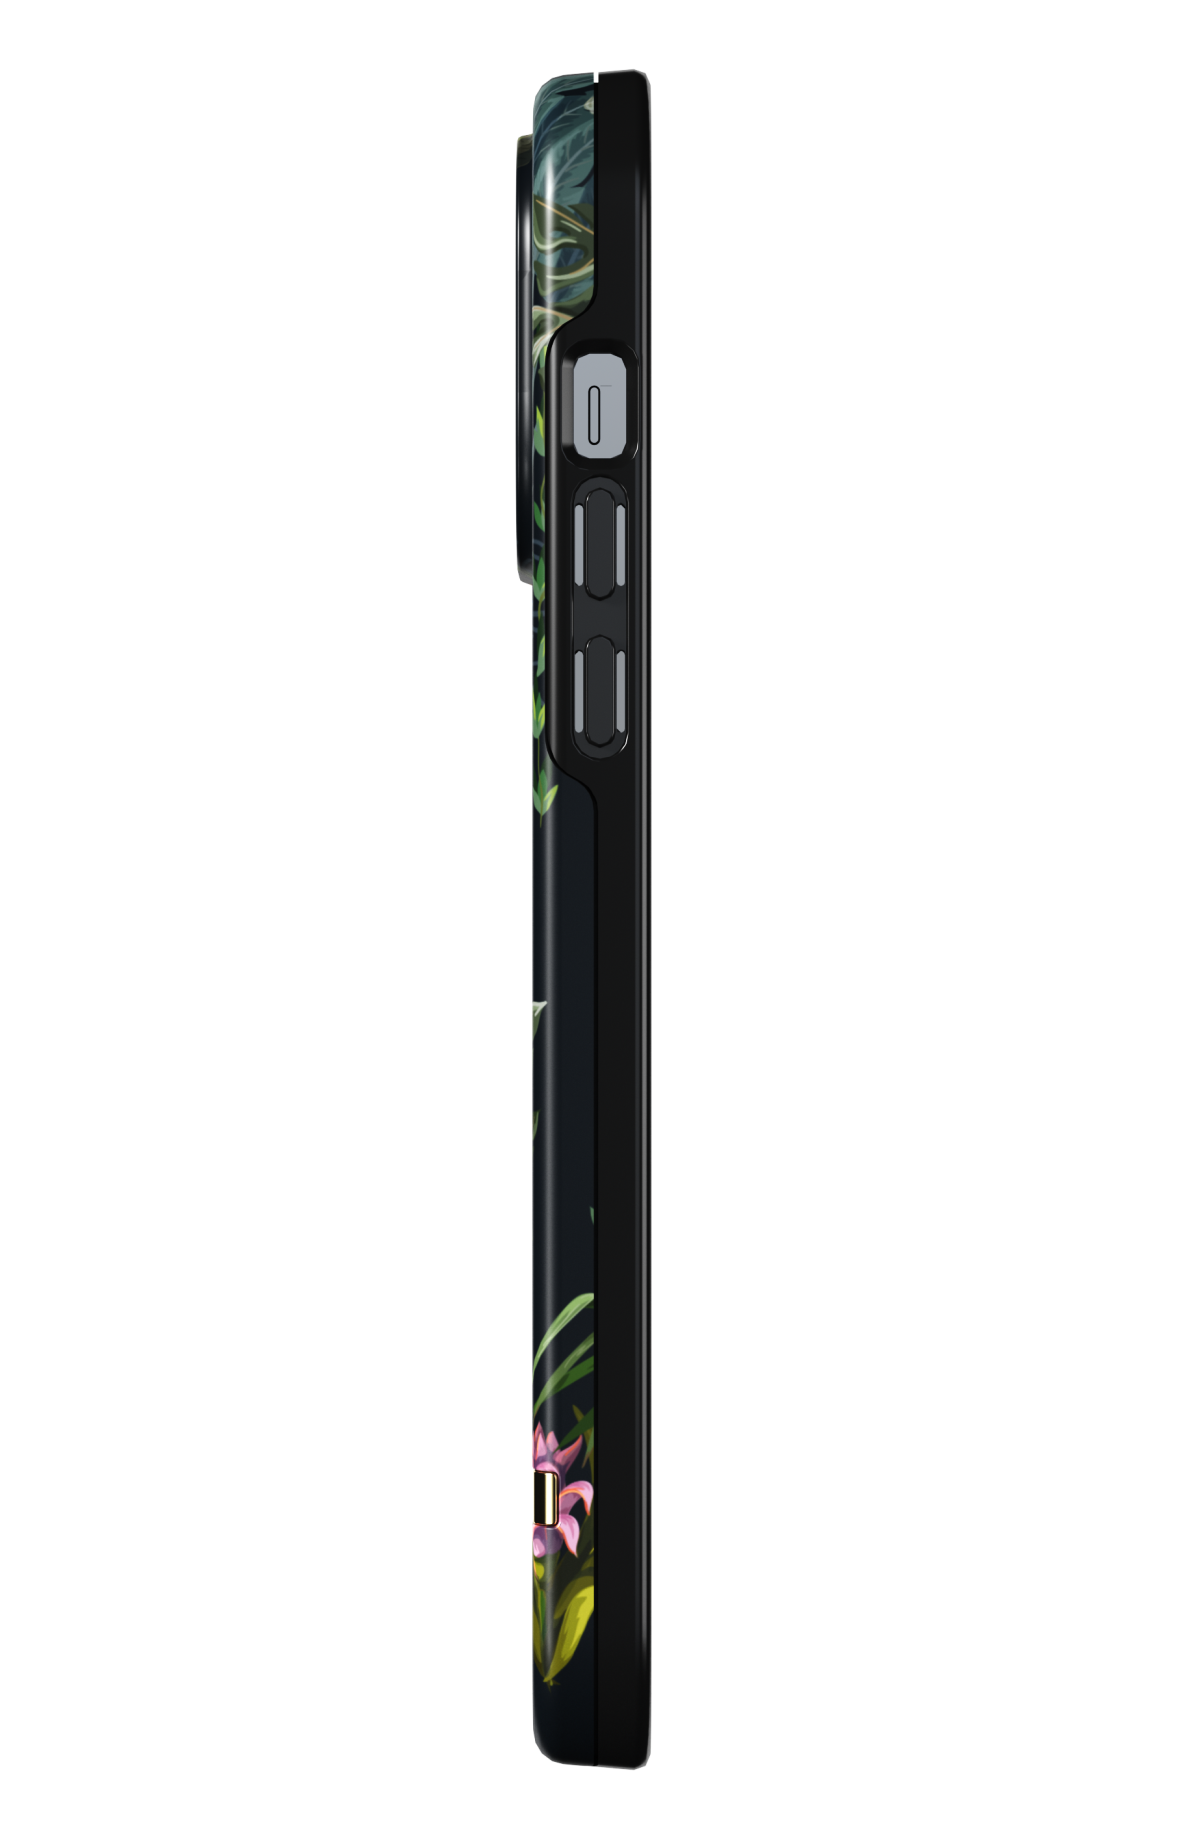 Backcover, Max, mehrfarbig 13 Tasche Dschungel-Flow, Apple, Pro iPhone iPhone & FINCH RICHMOND